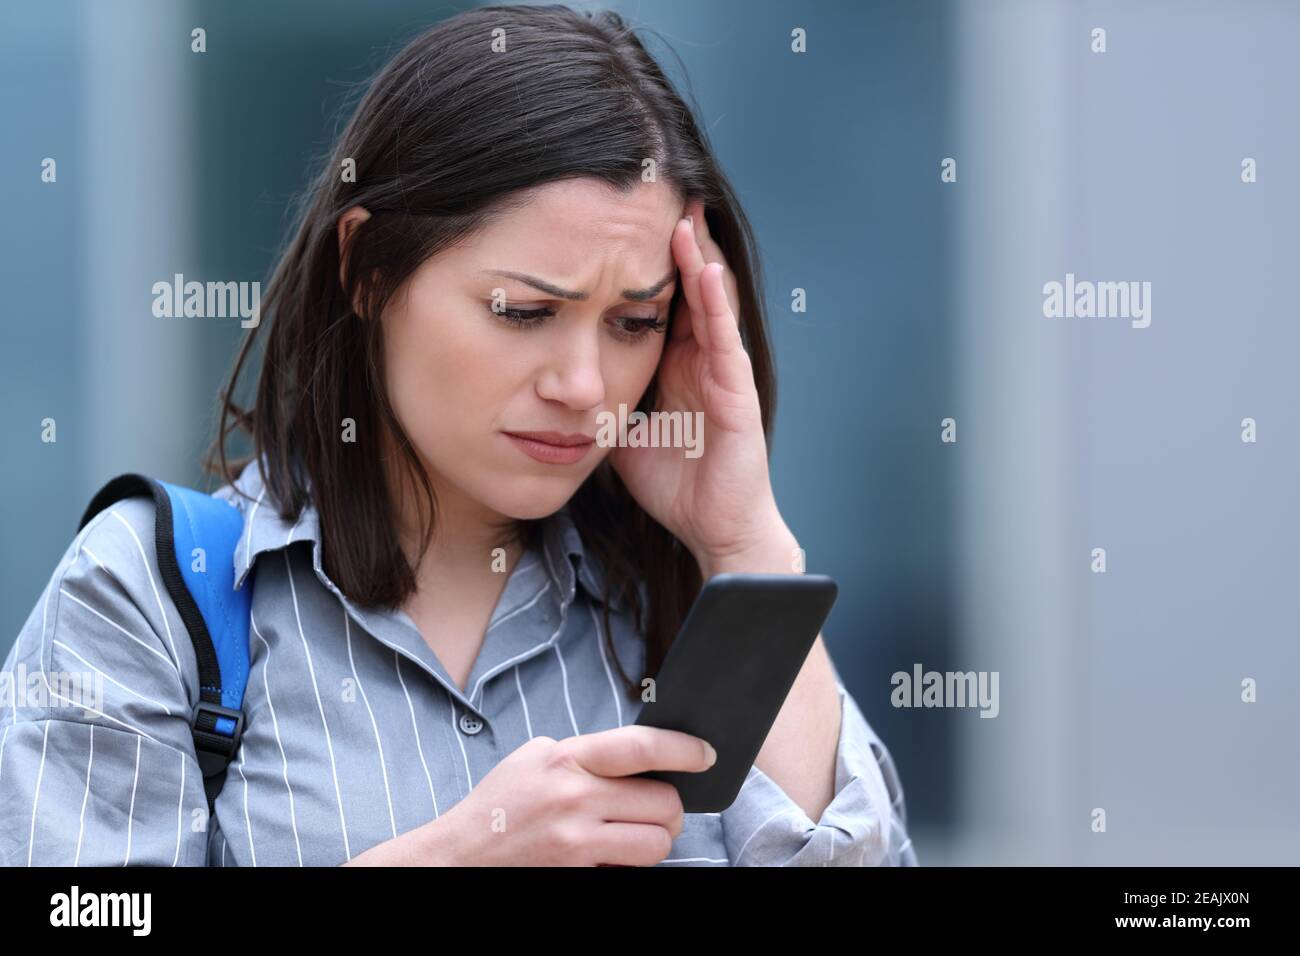 Worried student checks smart phone message Stock Photo